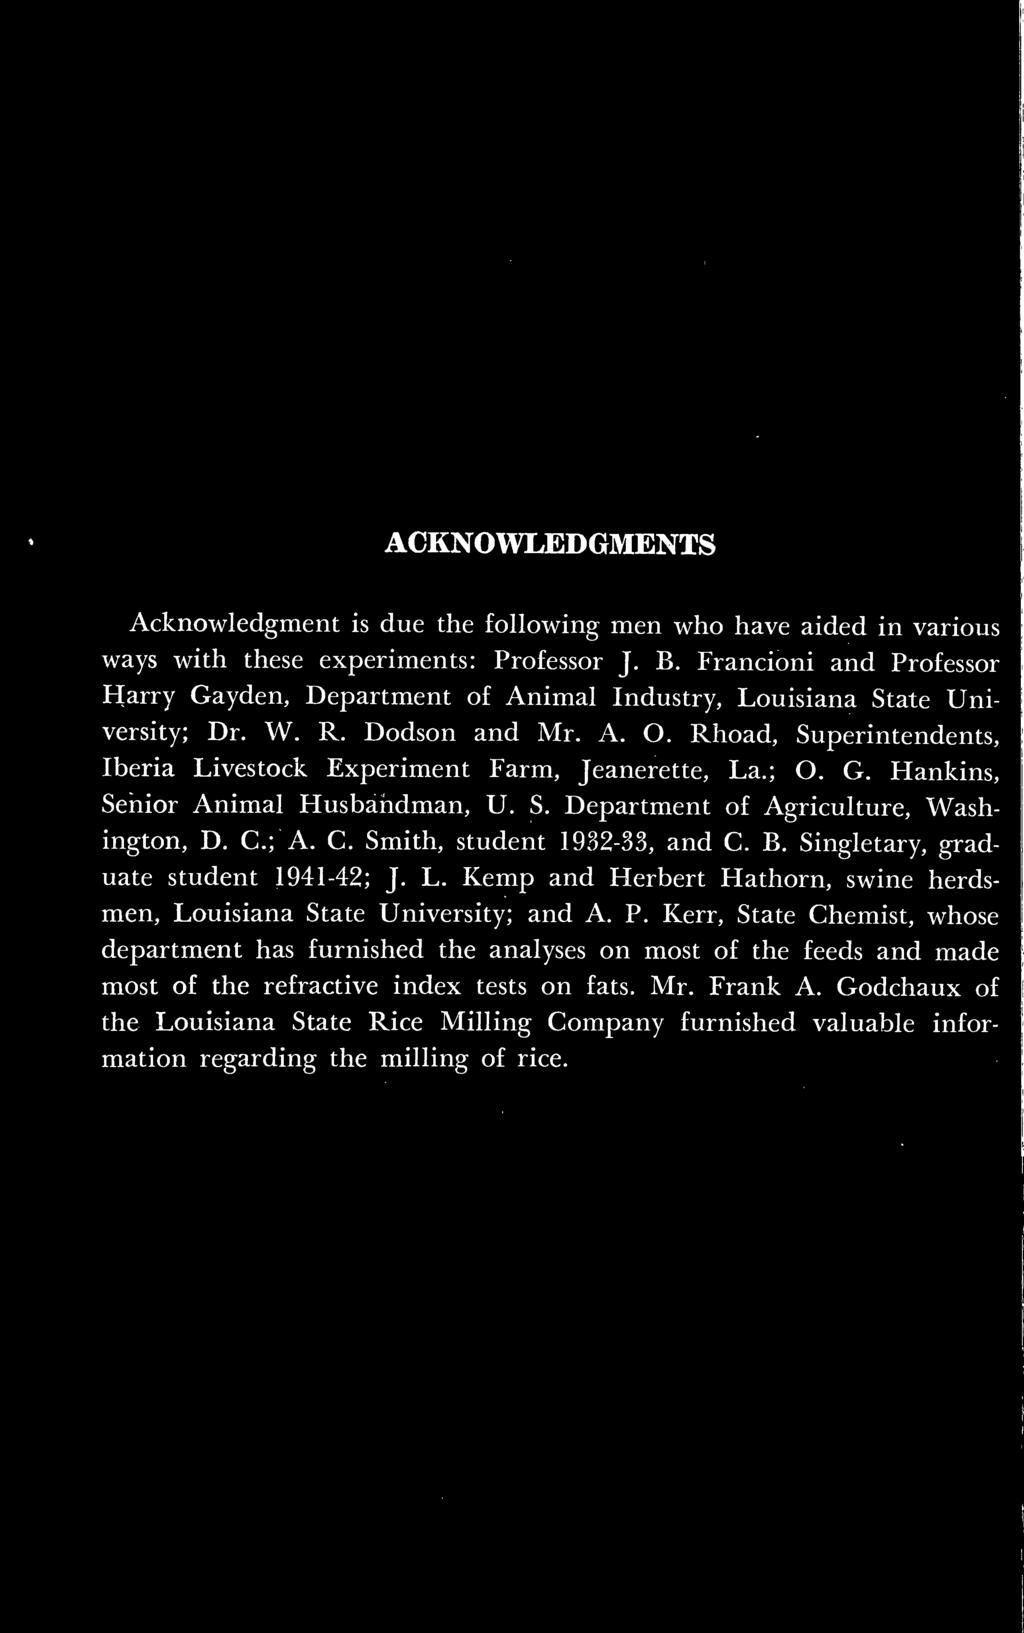 Rhoad, Superintendents, Iberia Livestock Experiment Farm, Jeanerette, La.; O. G. Hankins, Senior Animal Husbandman, U. S. Department of Agriculture, Washington, D. C.; A. C. Smith, student 1932-33, and C.